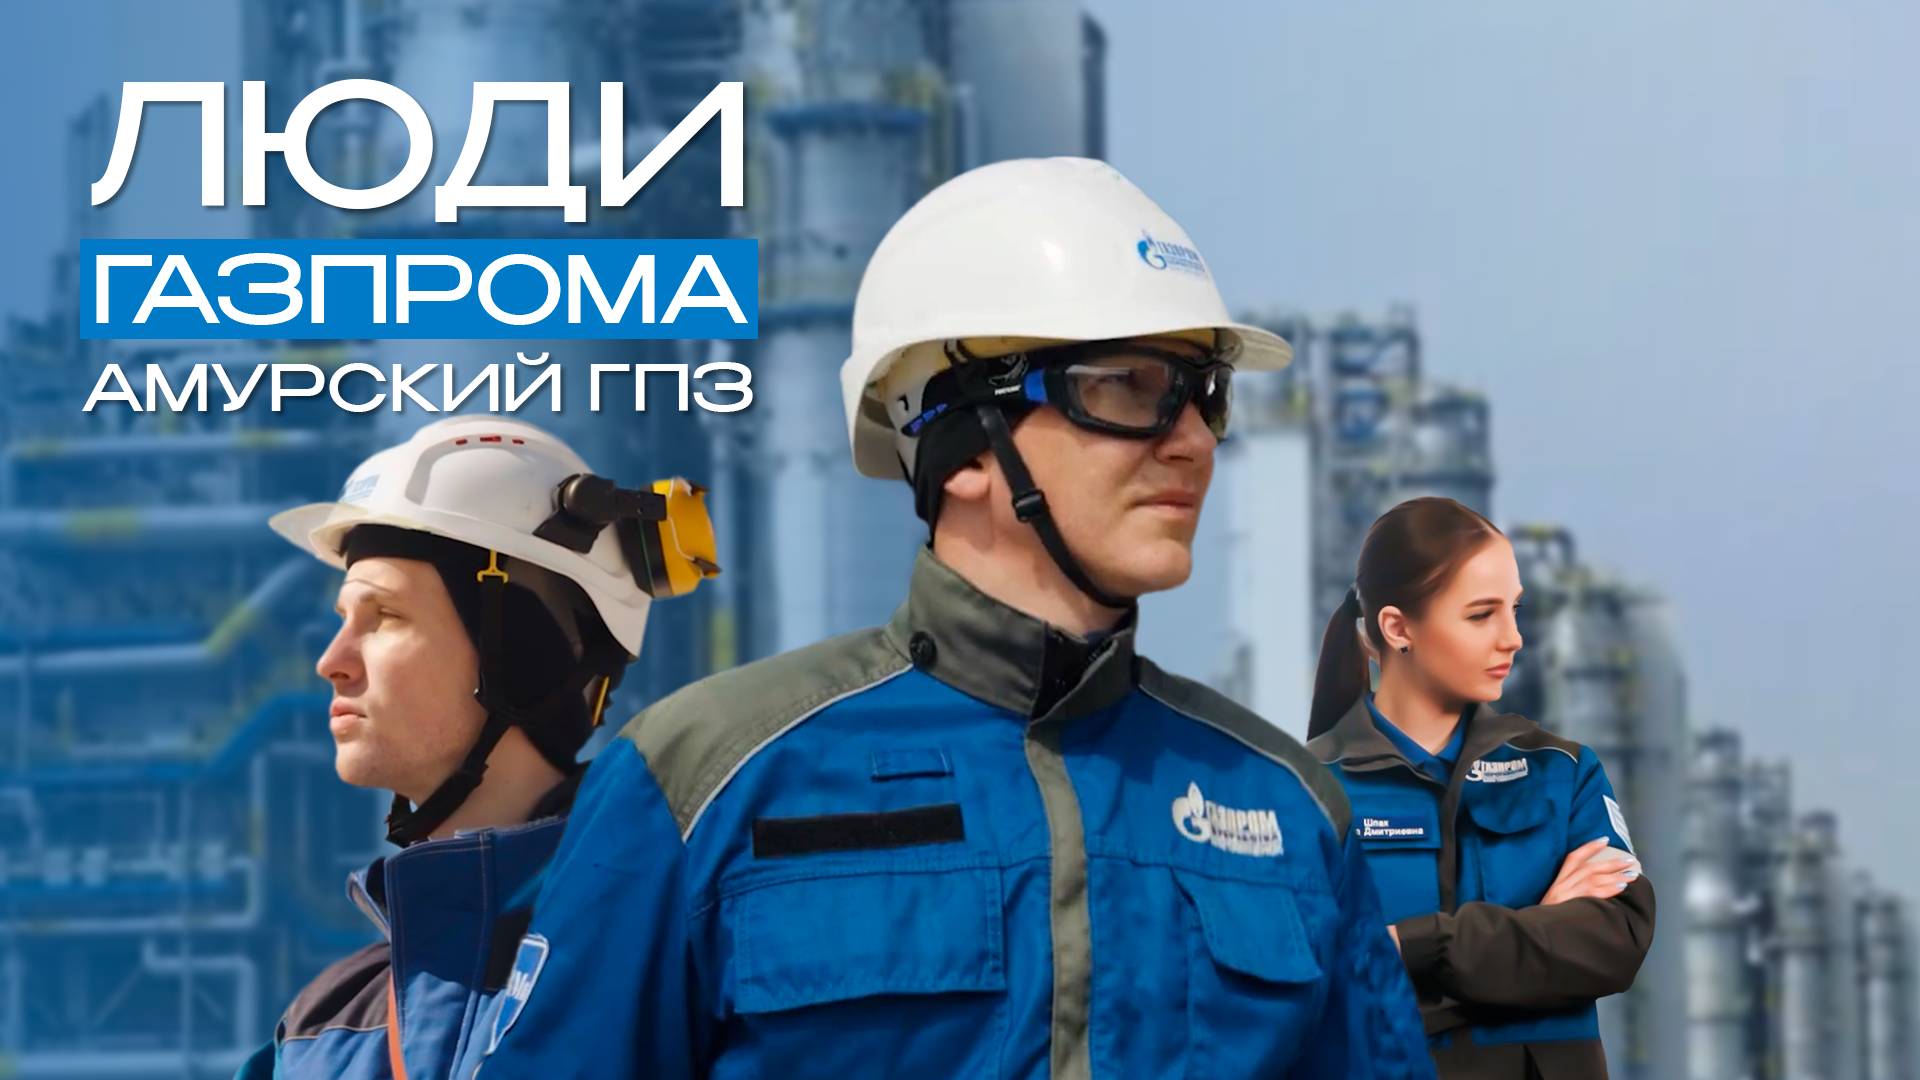 Люди «Газпрома». Амурский ГПЗ